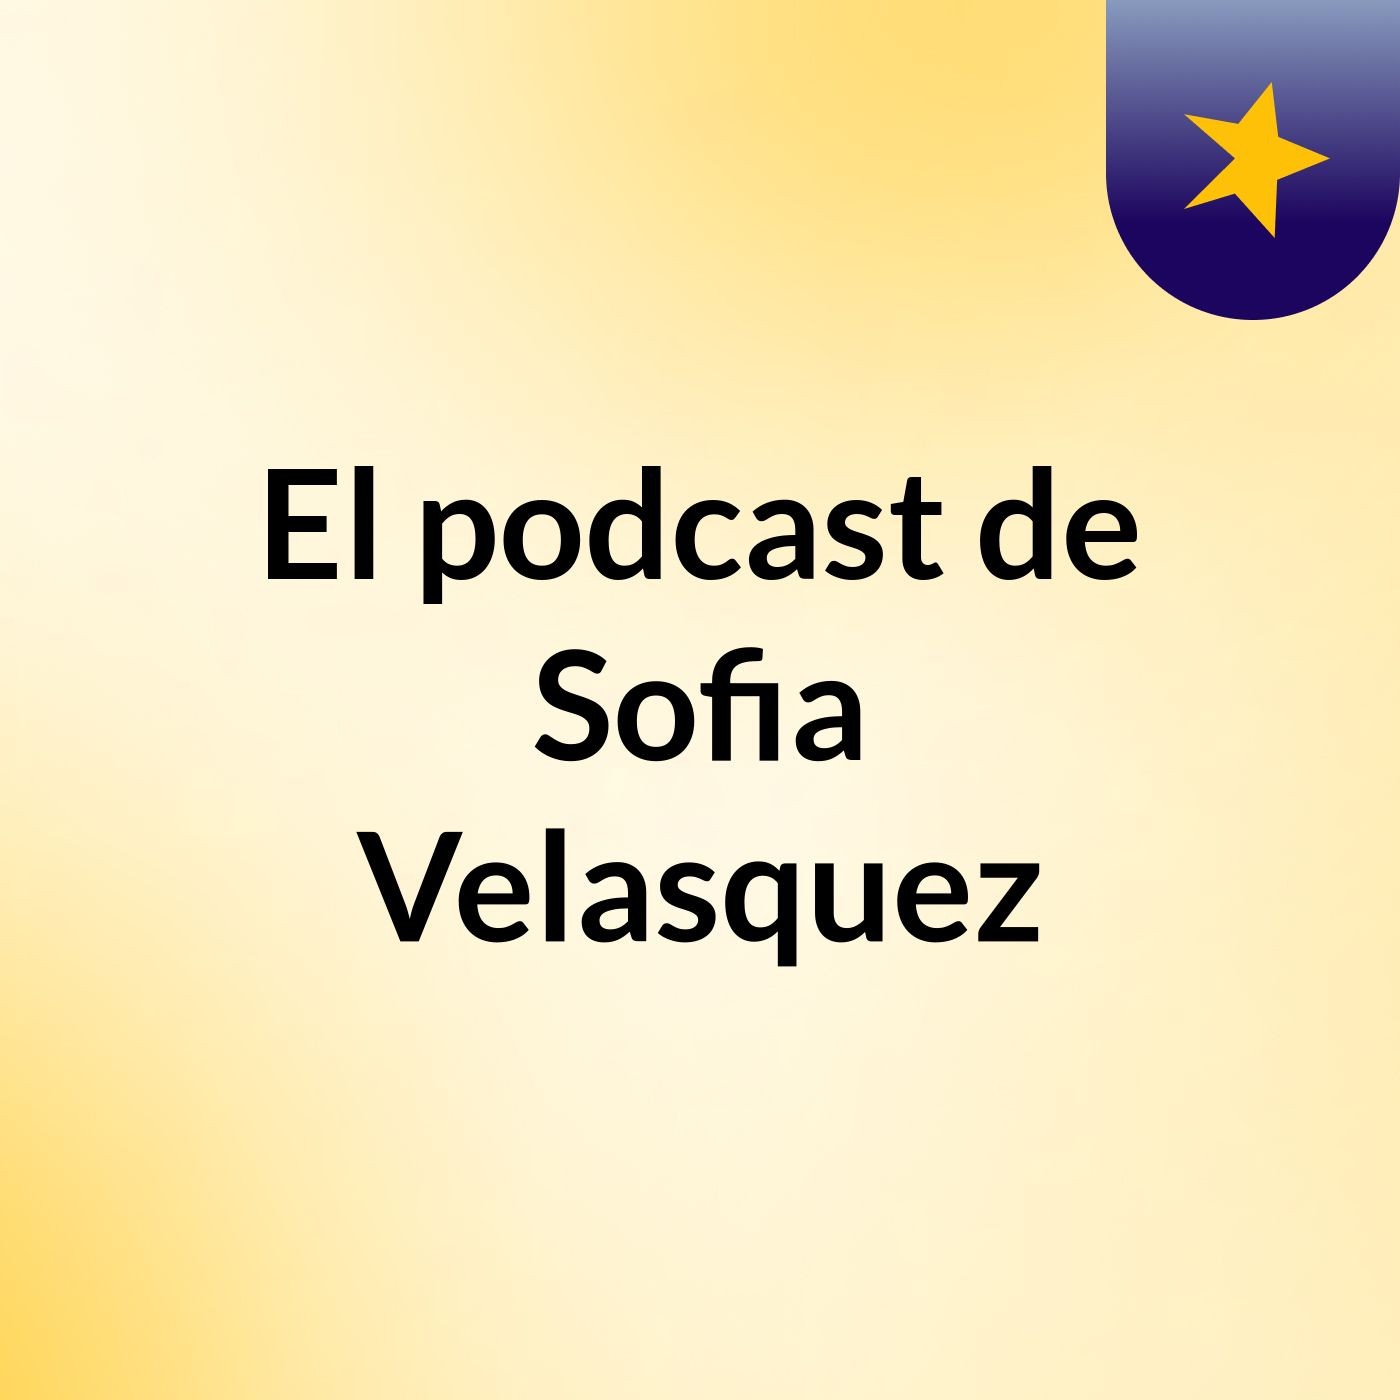 El podcast de Sofia Velasquez